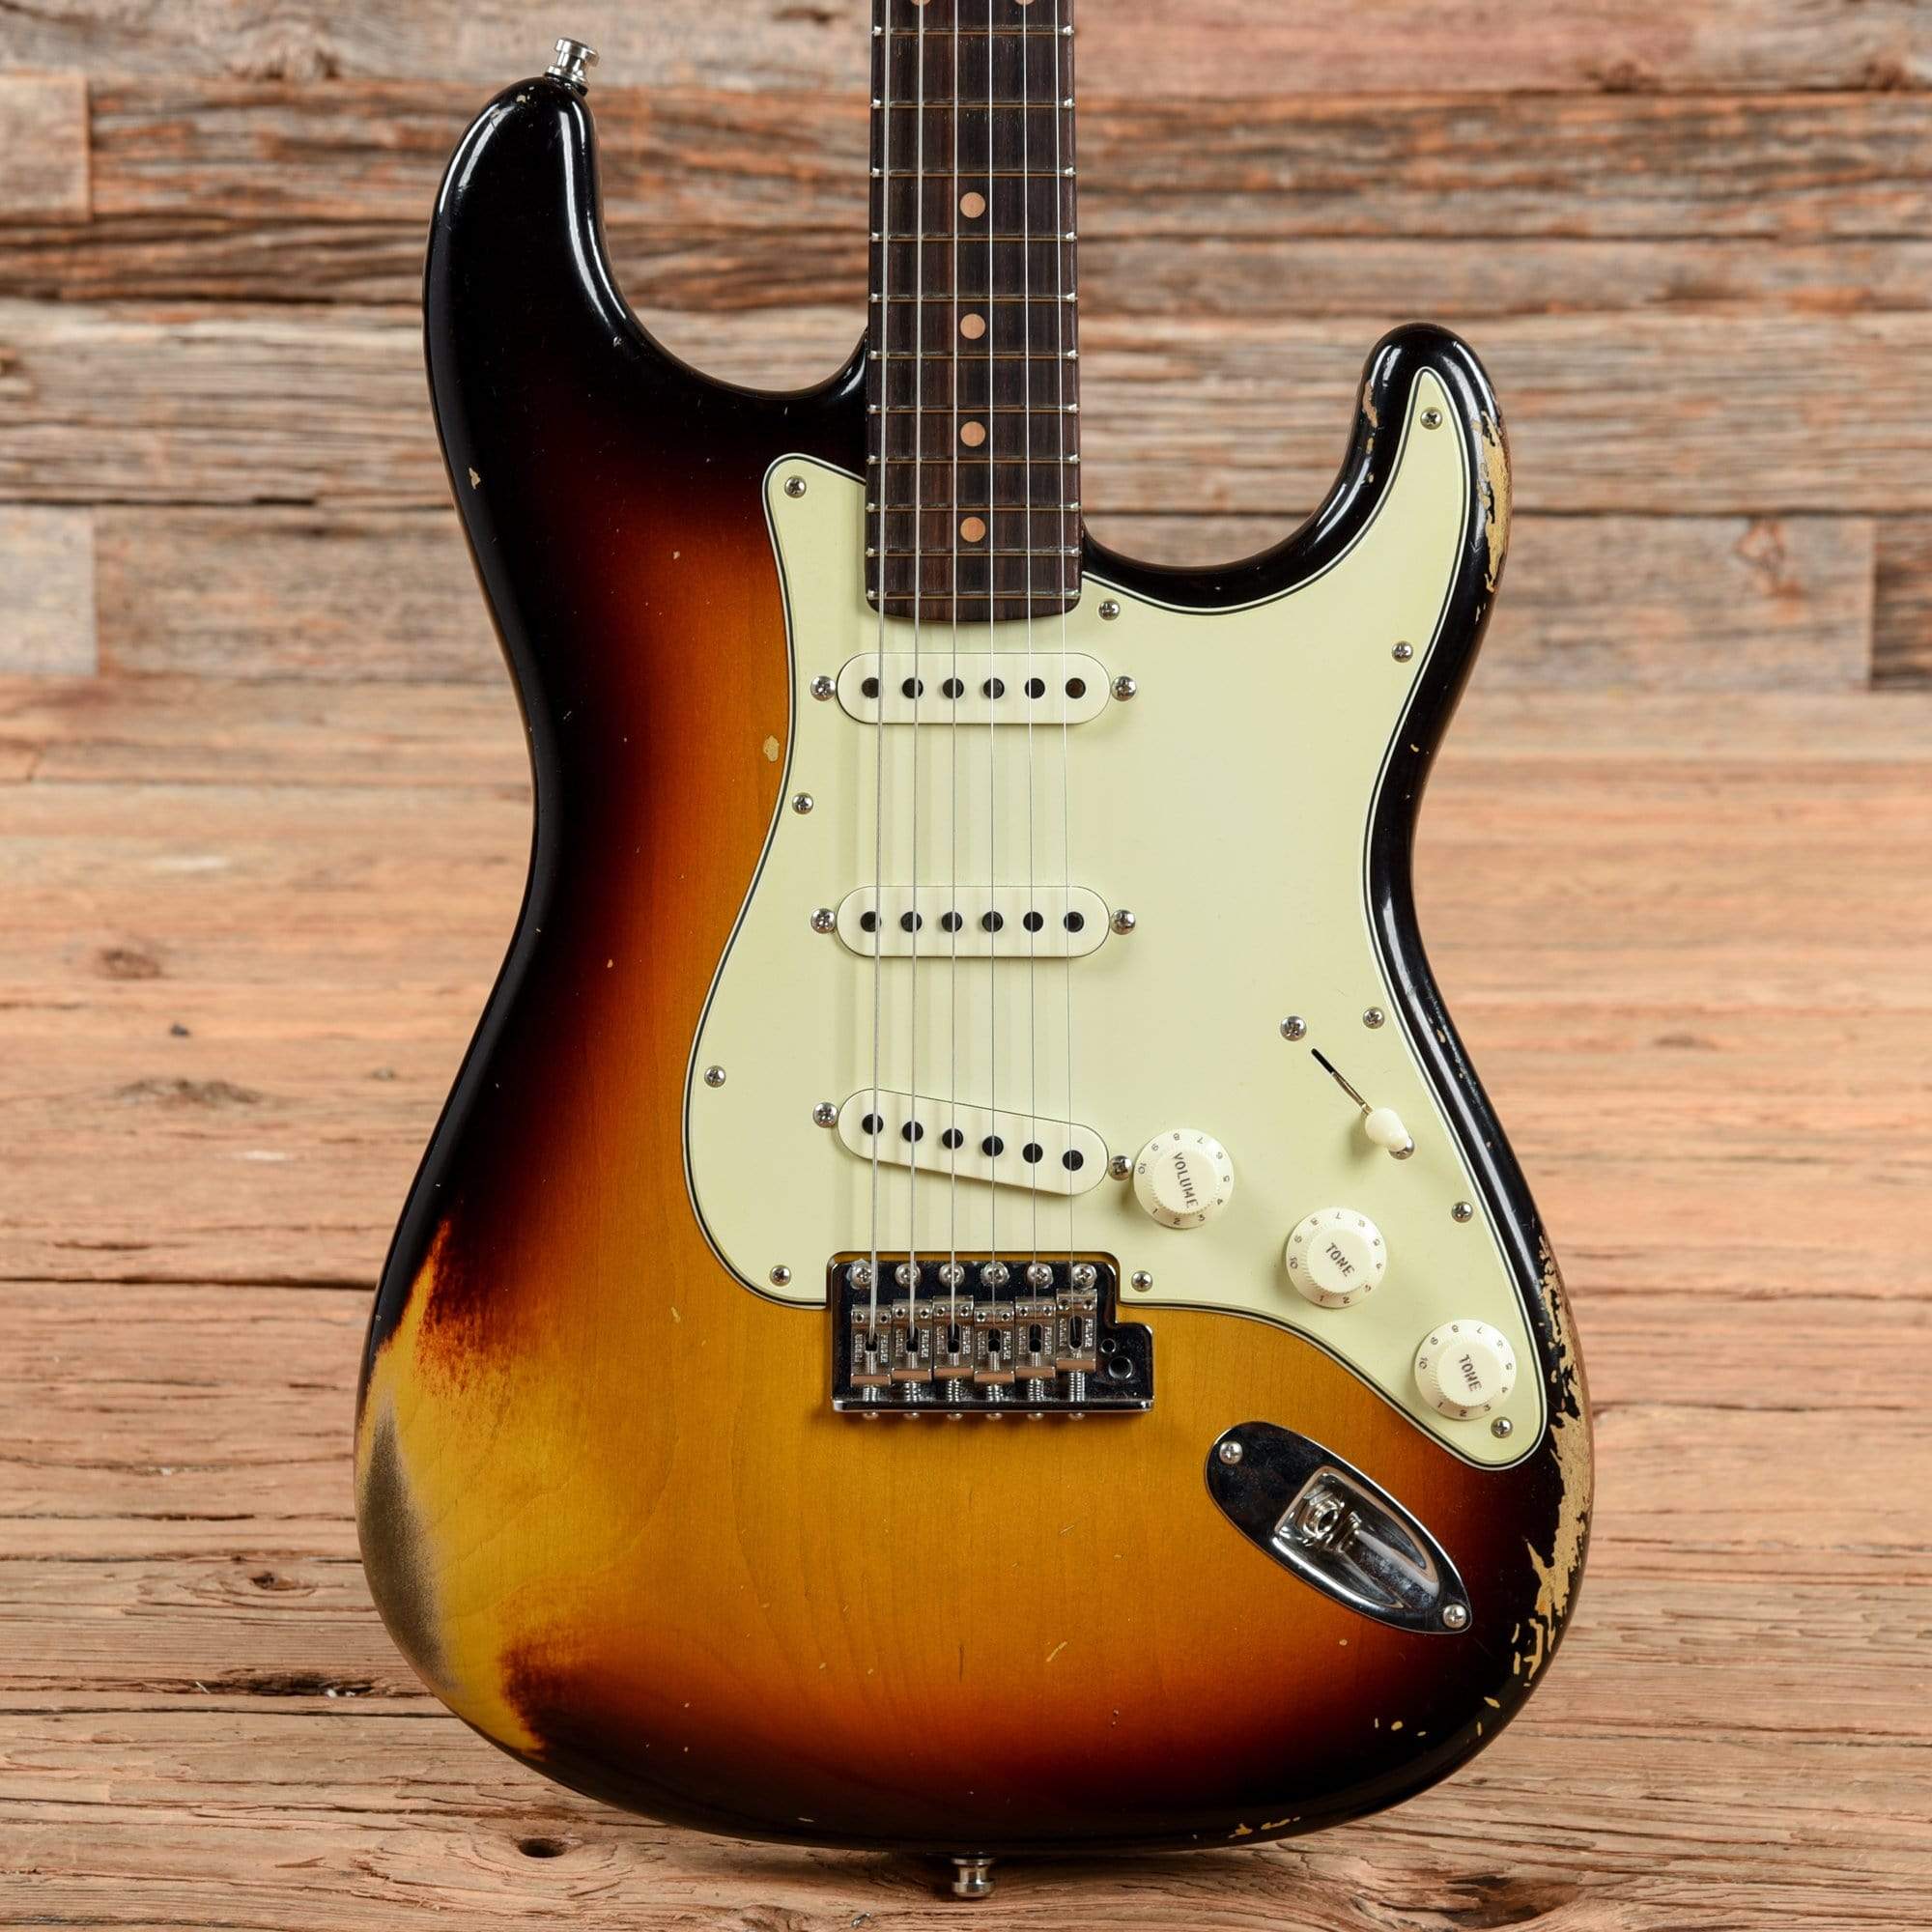 Fender Custom Shop GT11 Journeyman Relic Stratocaster - 3-Tone Sunburst -  Sweetwater Exclusive